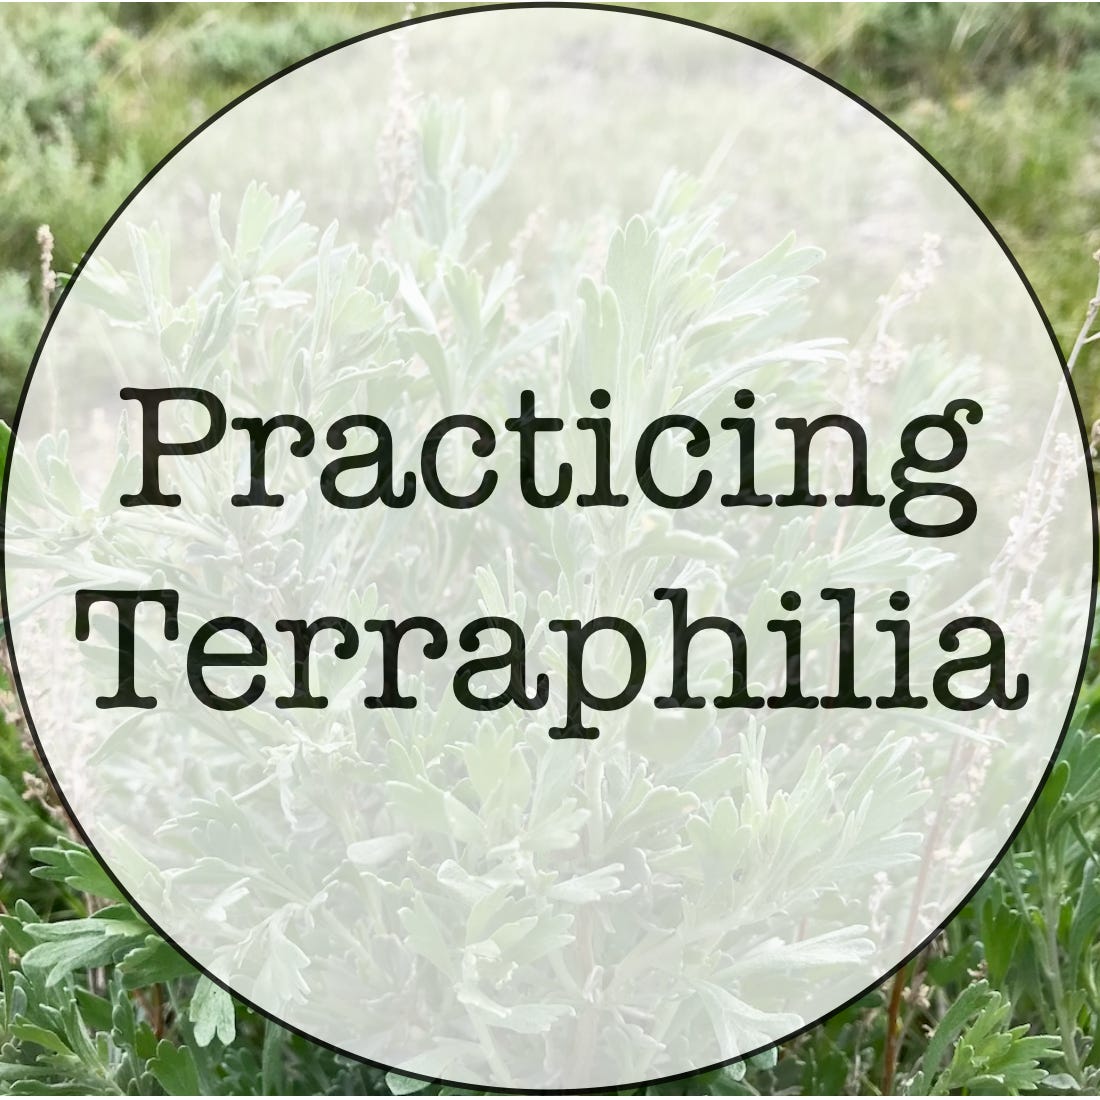 Practicing Terraphilia with Susan J Tweit